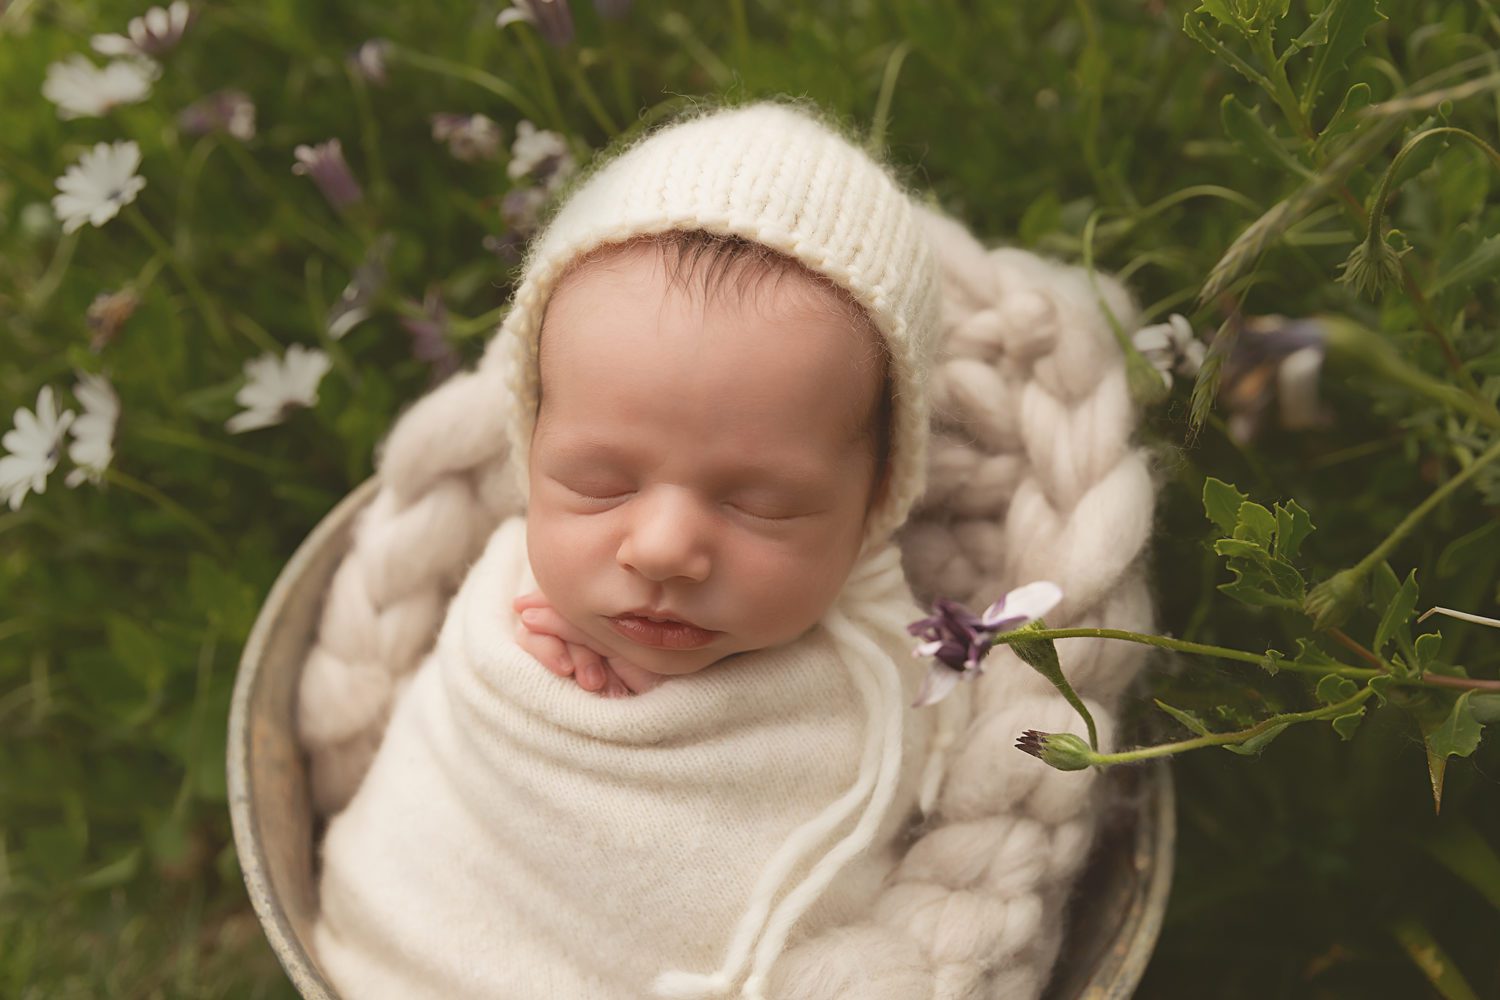 newborn baby wrapped in cream wrap in basket outside between flowers